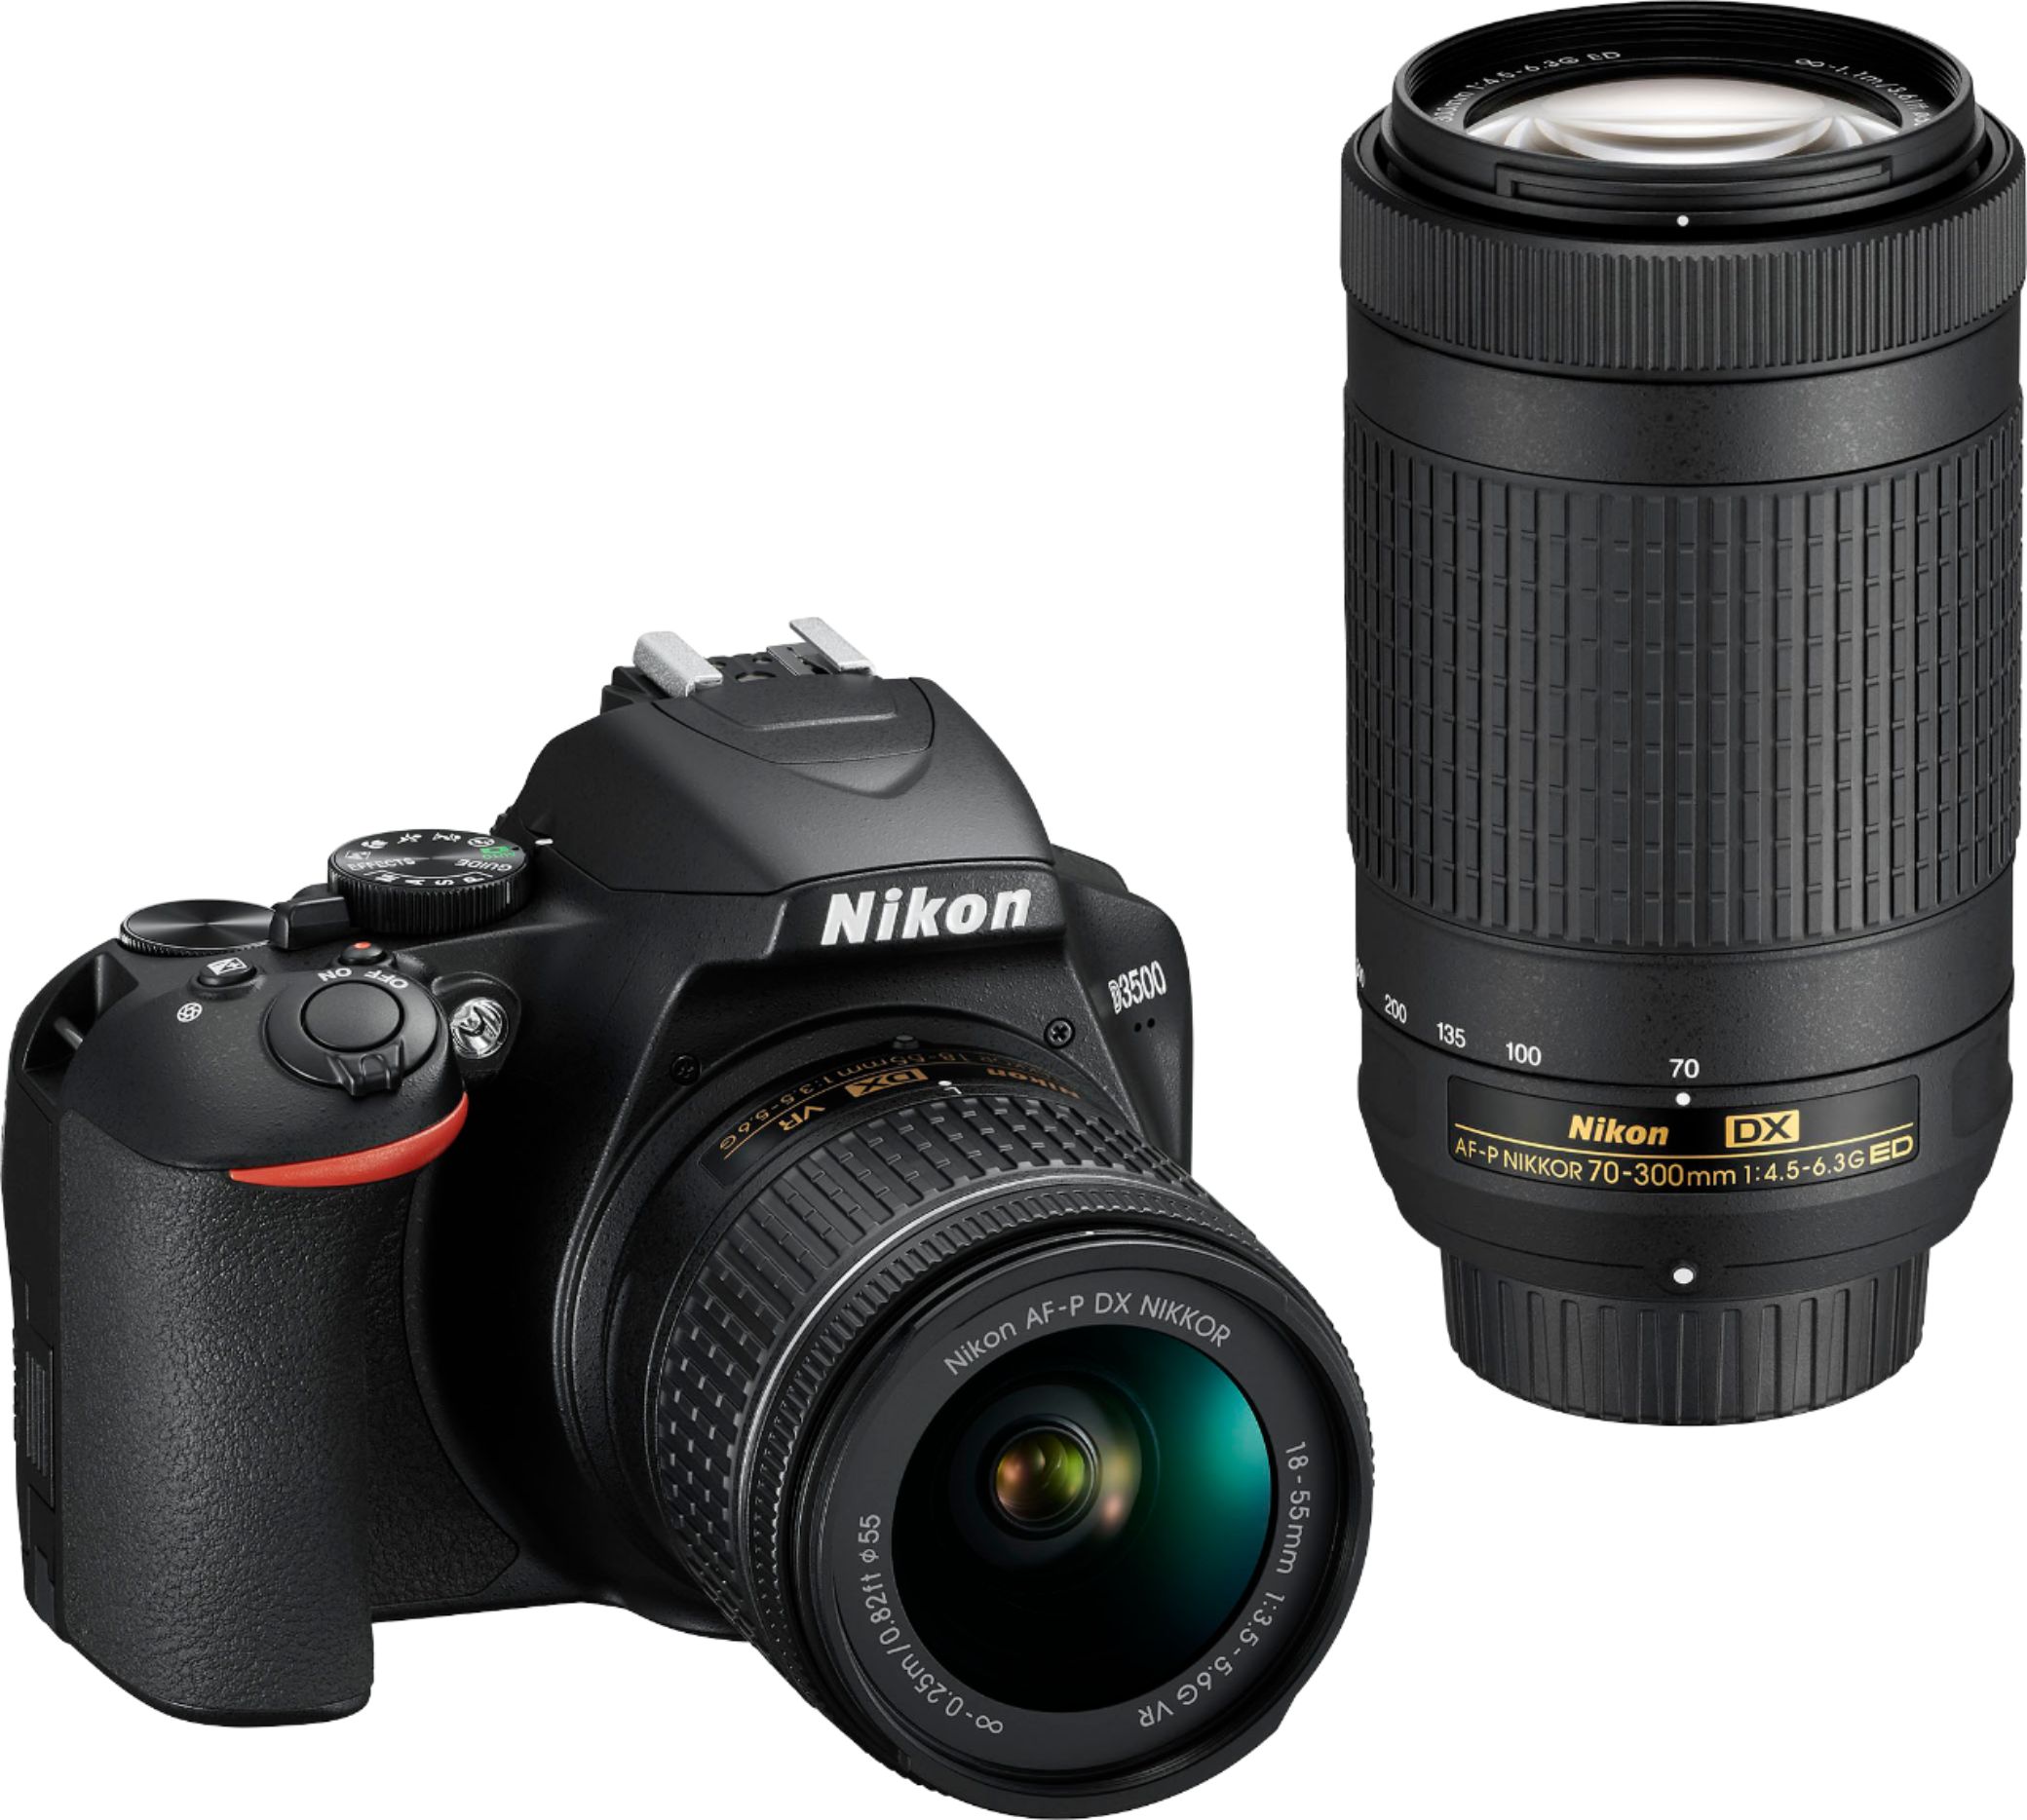 Pirate Engage Beyond doubt Nikon D3500 DSLR Video Two Lens Kit with AF-P DX NIKKOR 18-55mm f/3.5-5.6G  VR & AF-P DX NIKKOR 70-300mm f/4.5-6.3G ED Black 1588 - Best Buy